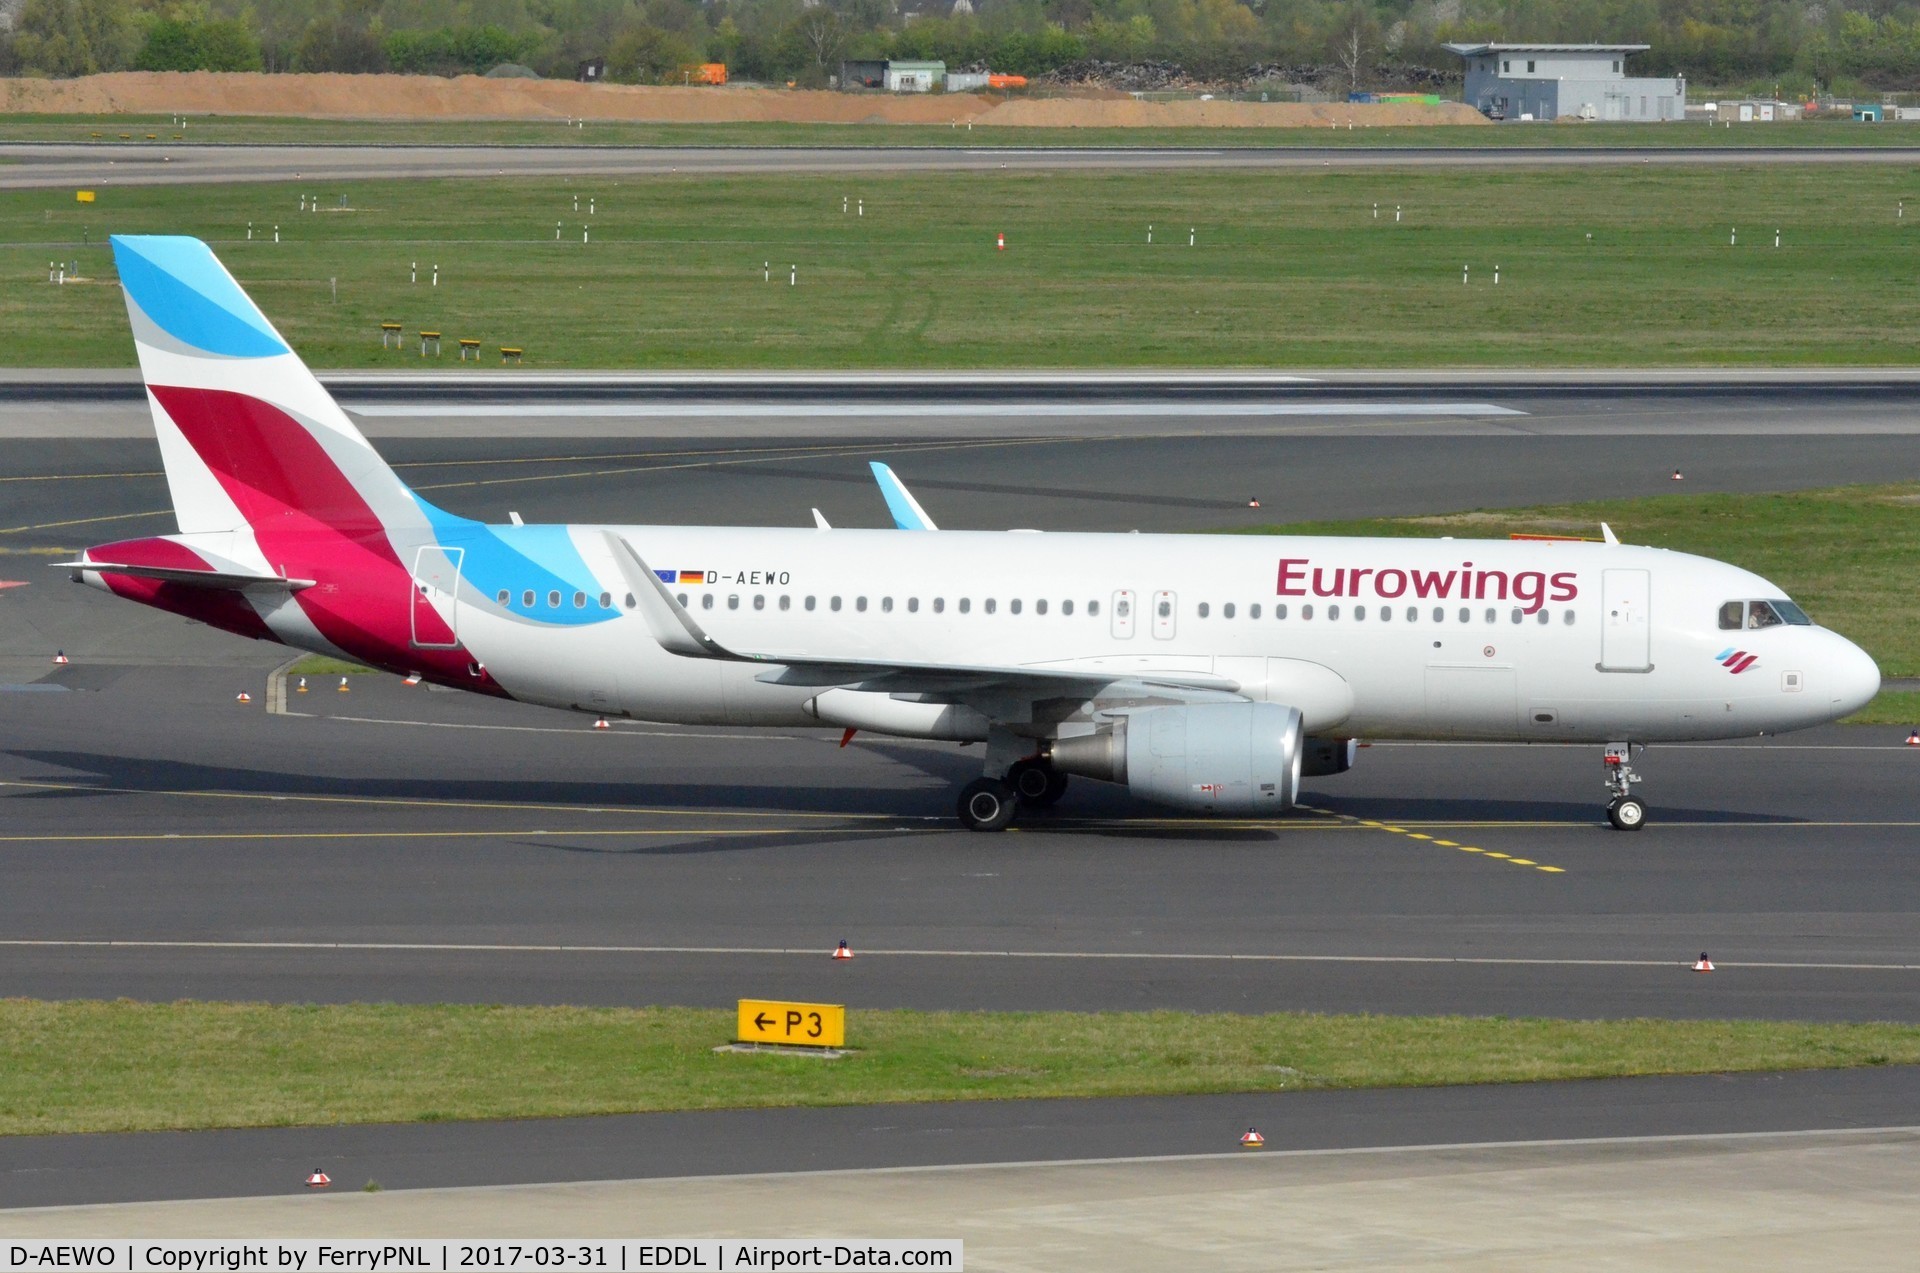 D-AEWO, 2016 Airbus A320-214 C/N 7394, Eurowings A320 arrived